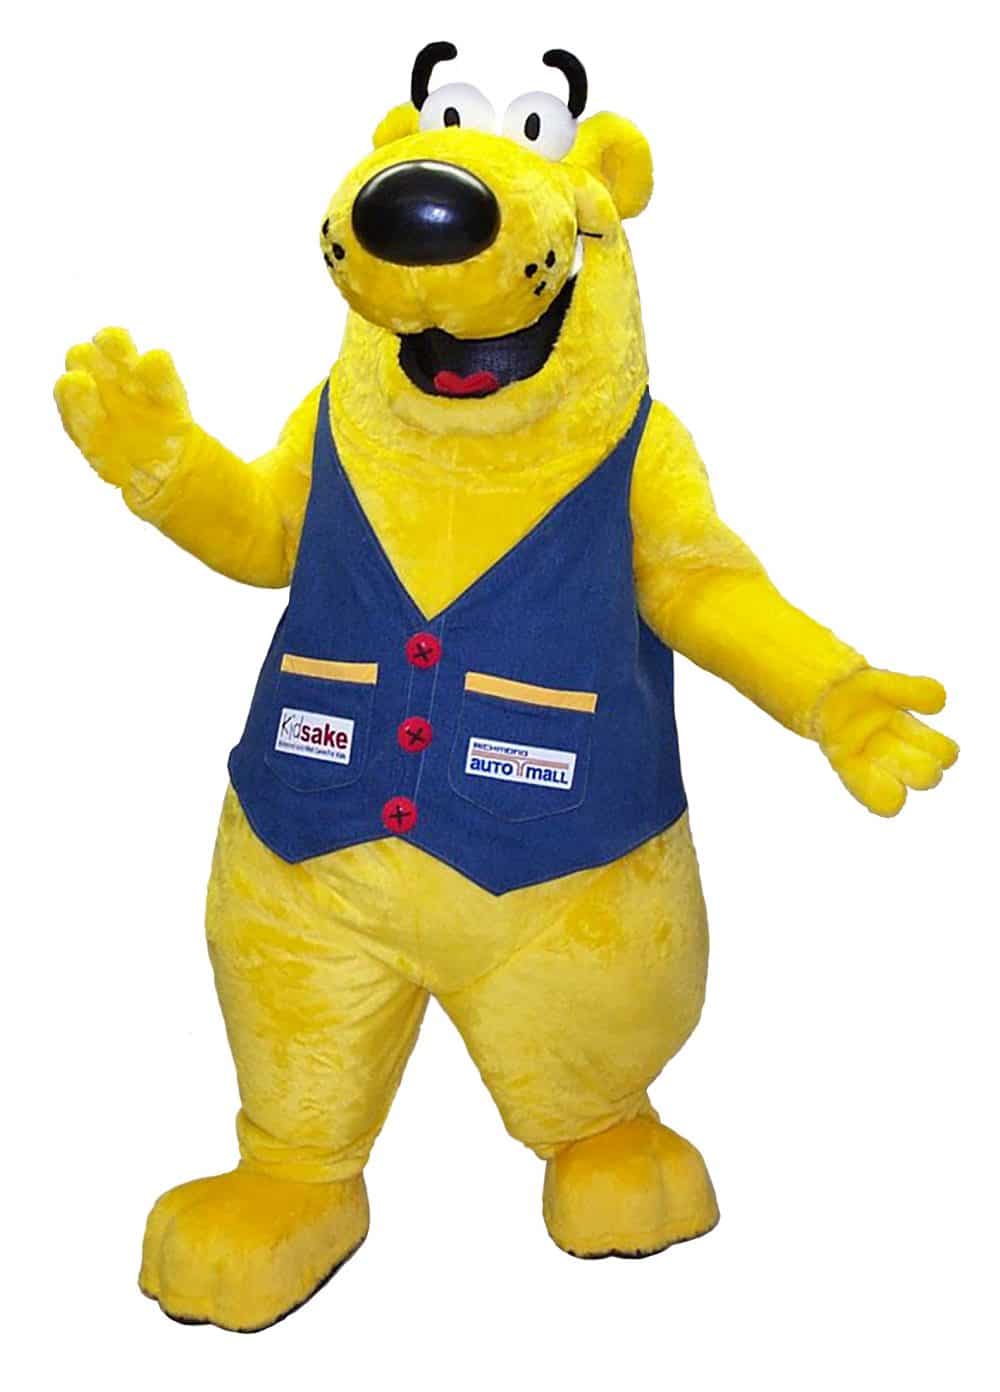 Orange Customised Mascot Dressed In Yellow Underwear - SpotSound Mascots in  Canada / US / Latin America Sizes L (175-180CM)